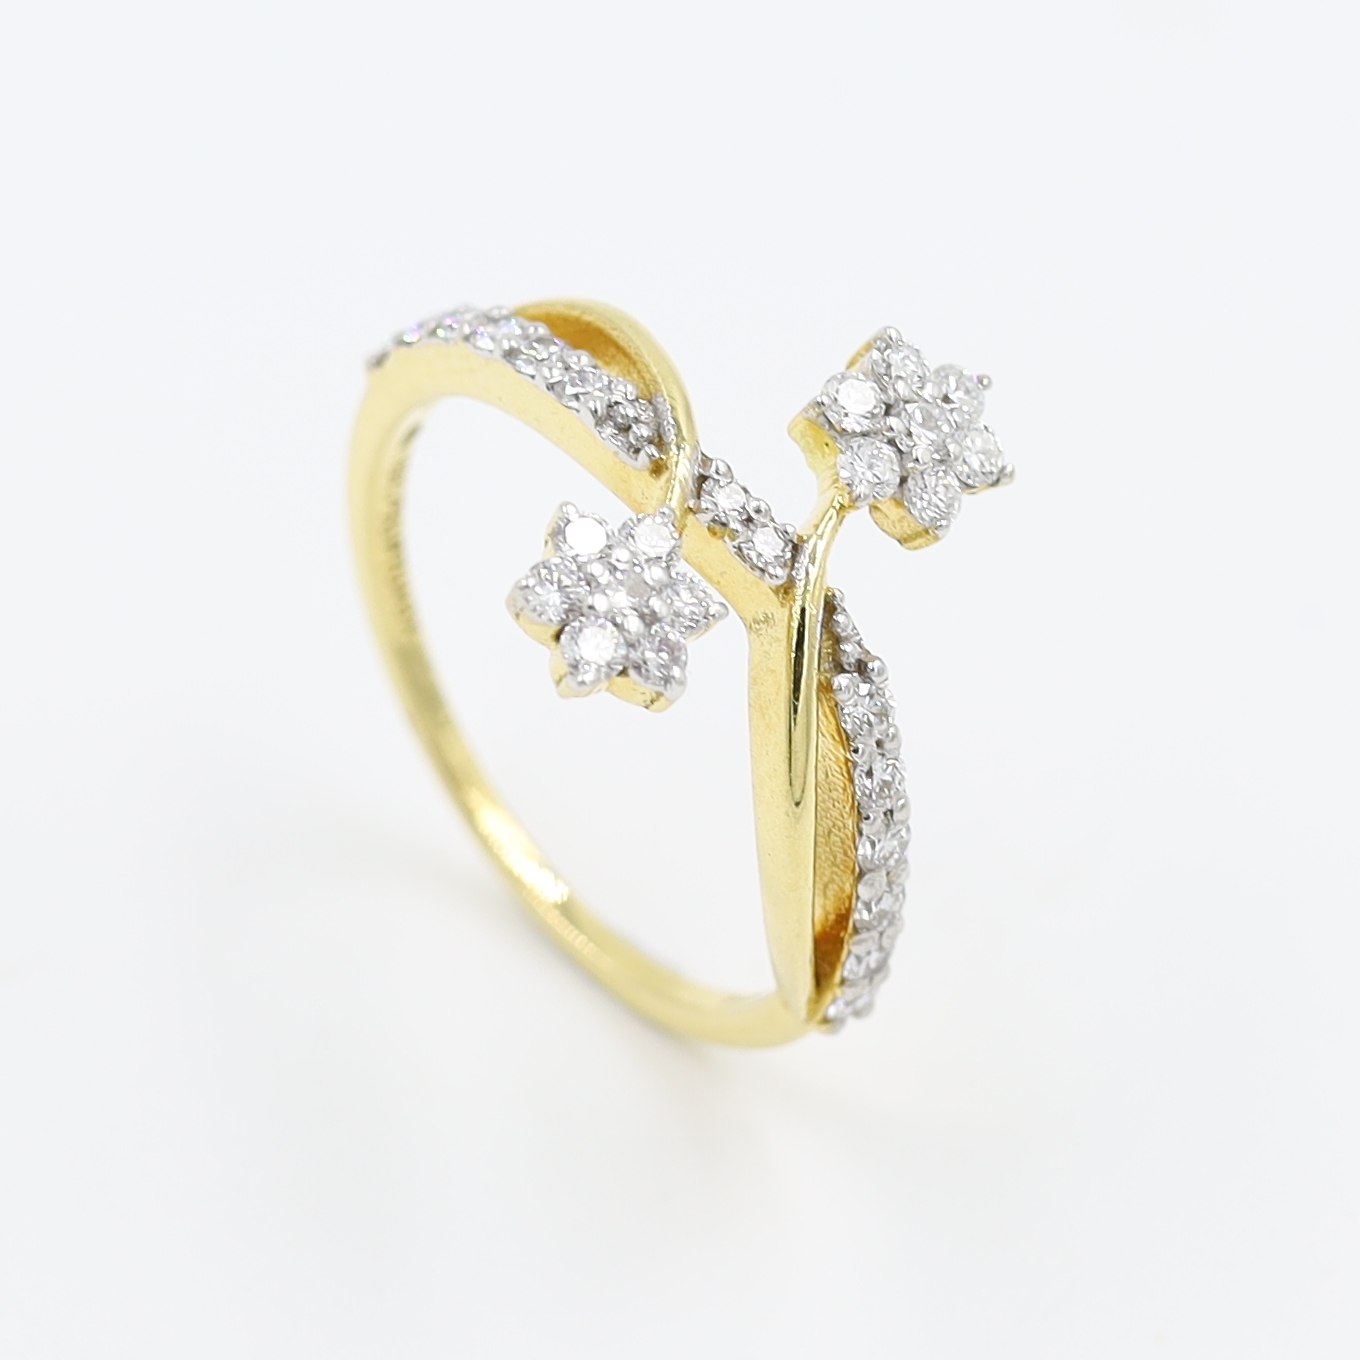 Subtle 18 Karat Gold And Diamond Cluster Ring